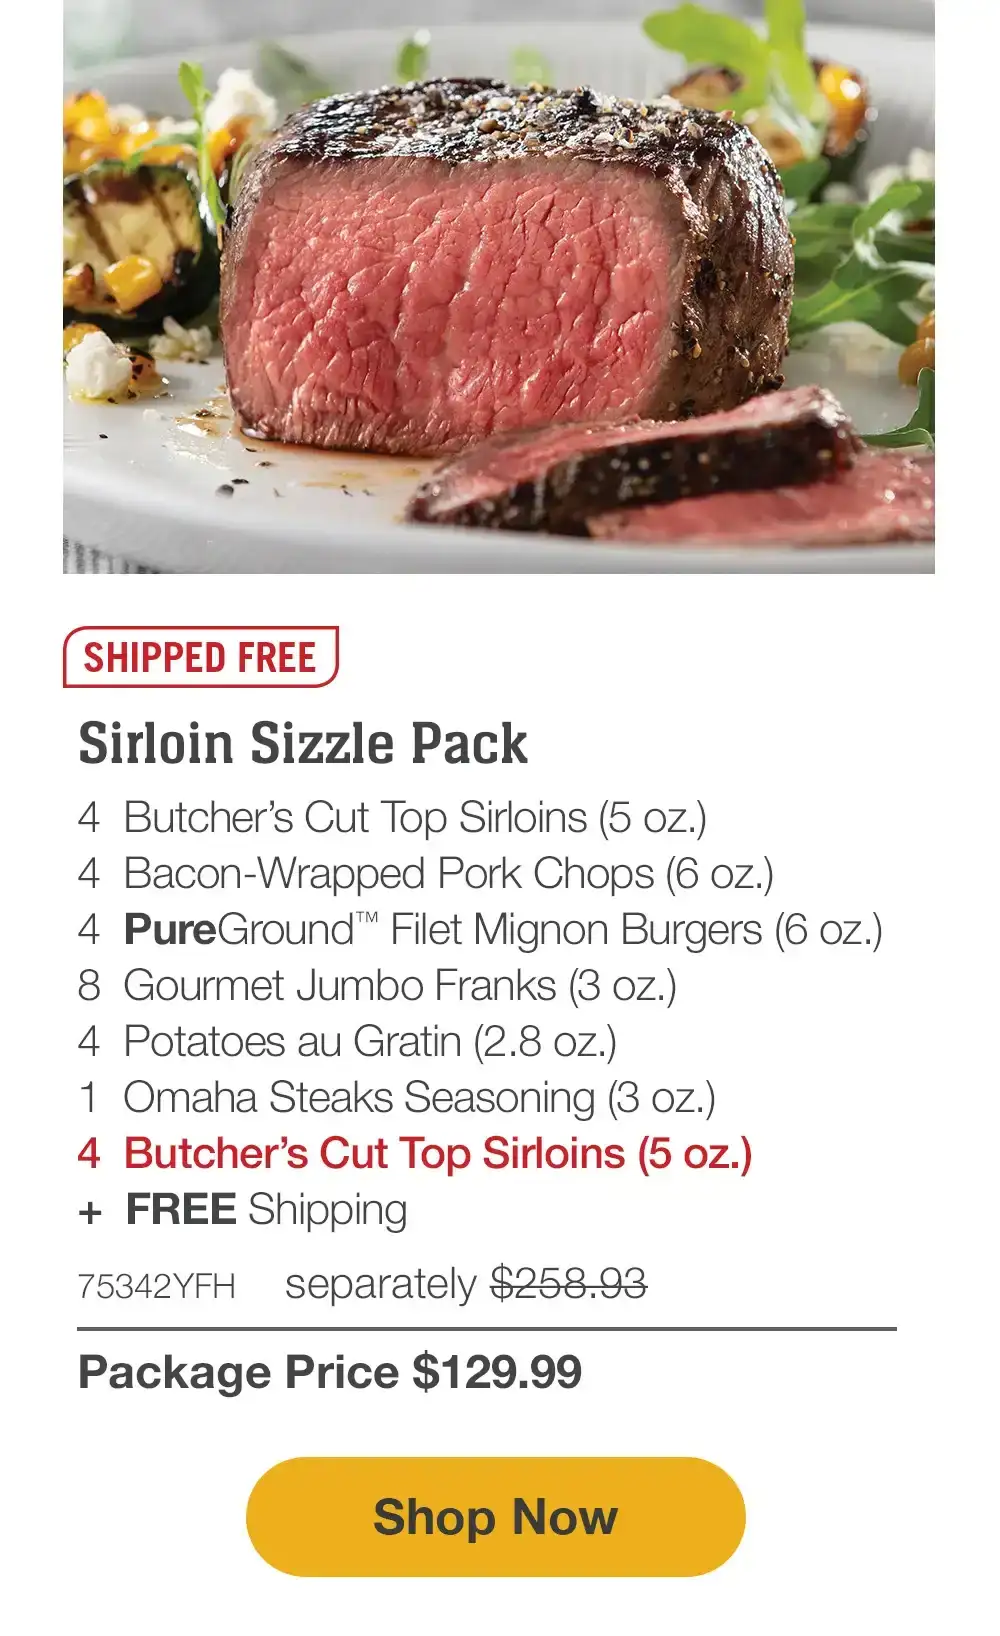 Ultimate Griller's Pack | 4 Bacon-Wrapped Filet Mignons (5 oz.)| 4 Boneless Pork Chops (6 oz.)| 4 PureGround Filet Mignon Burgers (6 oz.) | 4 Gourmet Jumbo Franks (3 oz.)|4 Caramel Apple Tartlets (4 oz.)|1 Omaha Steaks Seasoning (3 oz.)| 4 FREE Butcher’s Cut Top Sirloins (5 oz.)| 71946YFH separately \\$260.94 Package Price \\$129.99 || Shop Now